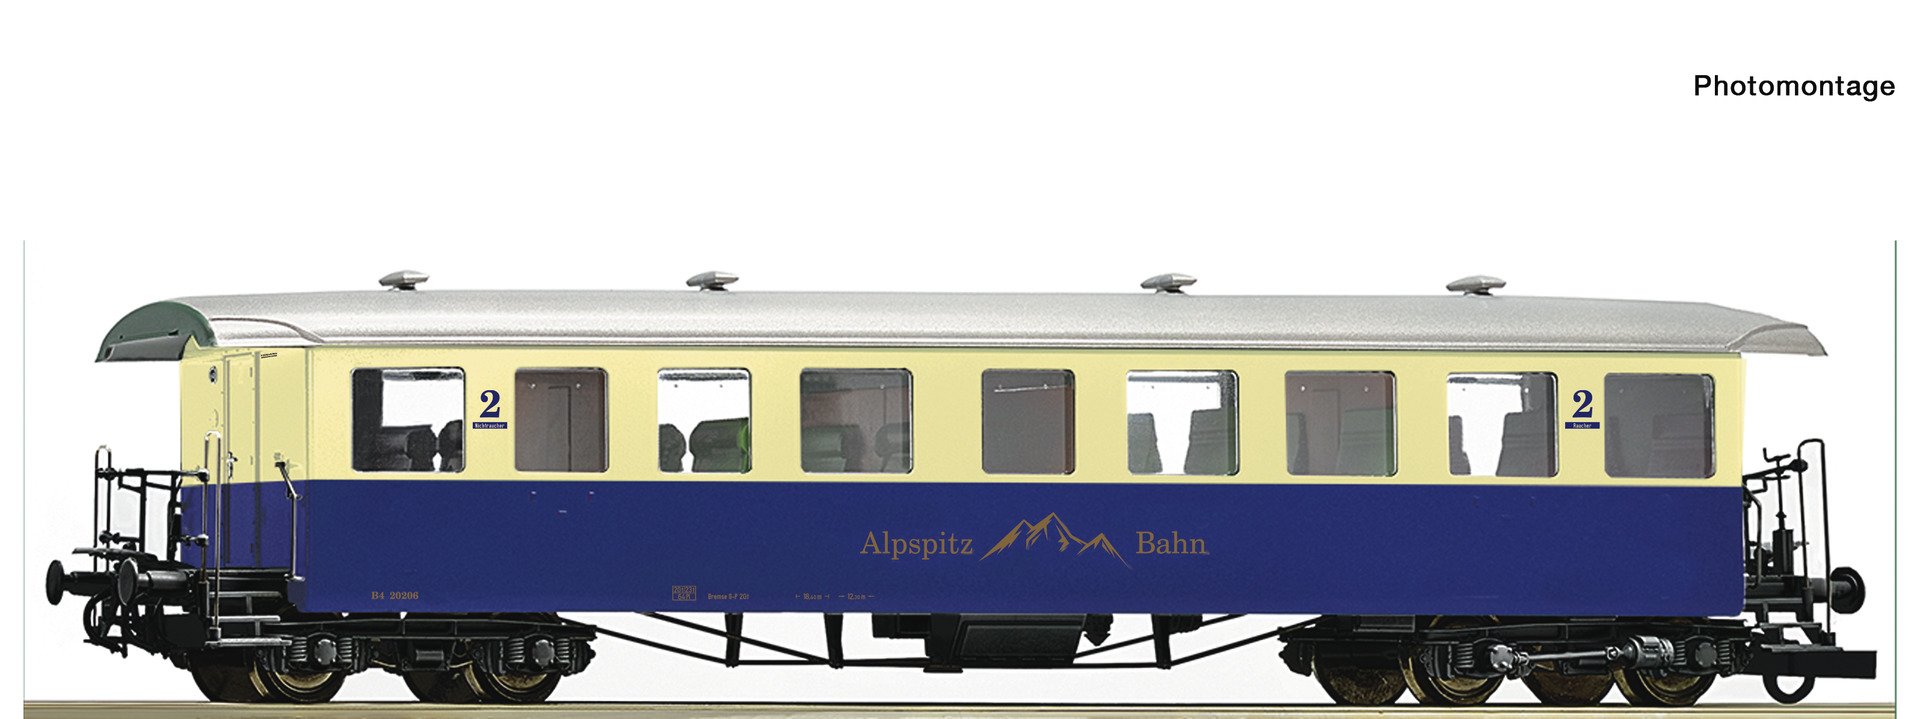 Roco 74507, Alpspitz-Bahn, Zahnradbahn-Personenwagen, 2. Klasse, creme/blau